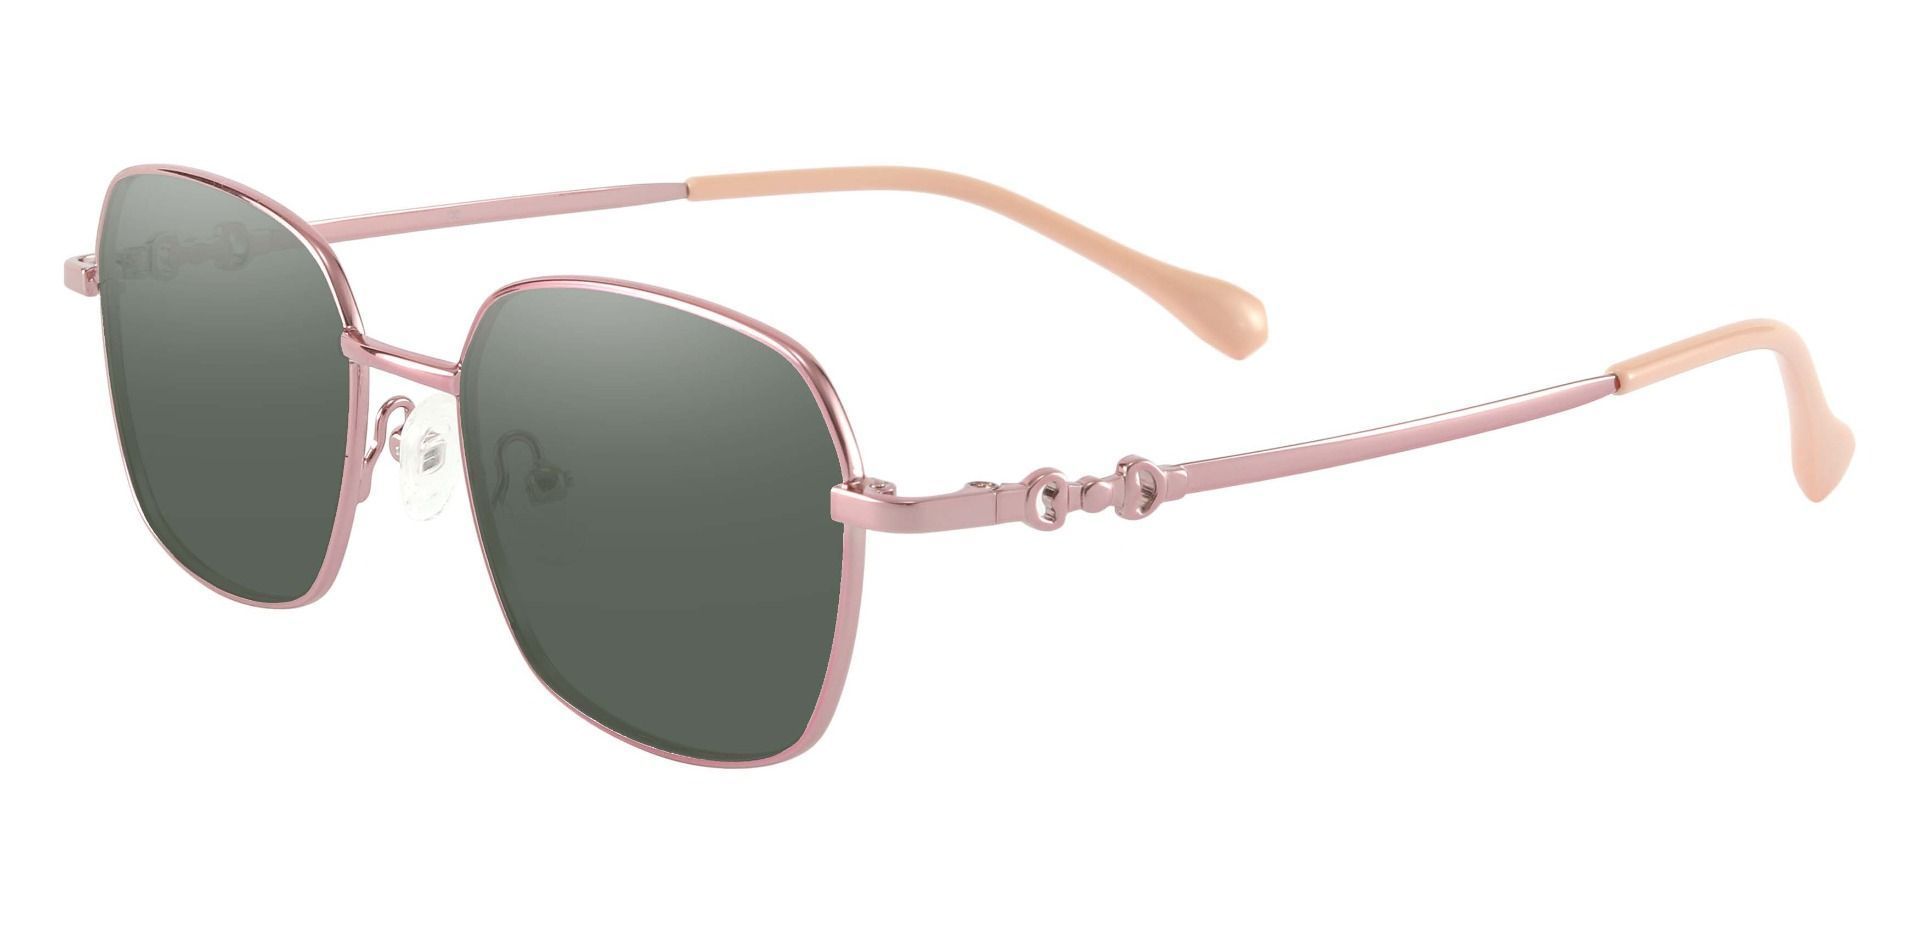 Averill Geometric Non-Rx Sunglasses - Rose Gold Frame With Green Lenses